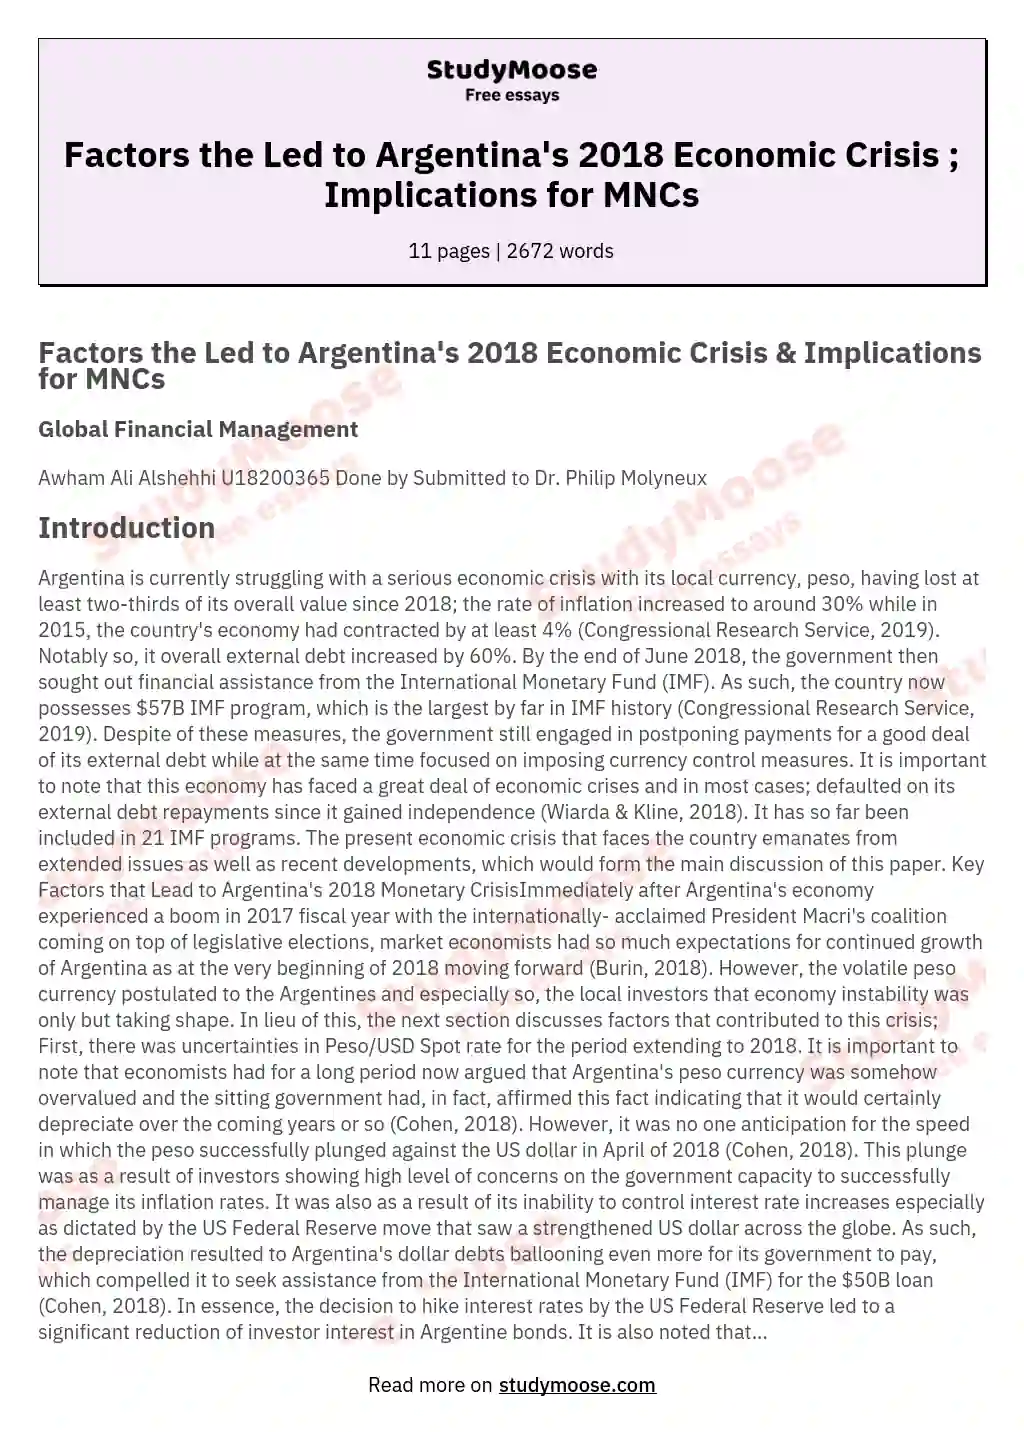 Factors the Led to Argentina's 2018 Economic Crisis ; Implications for MNCs essay